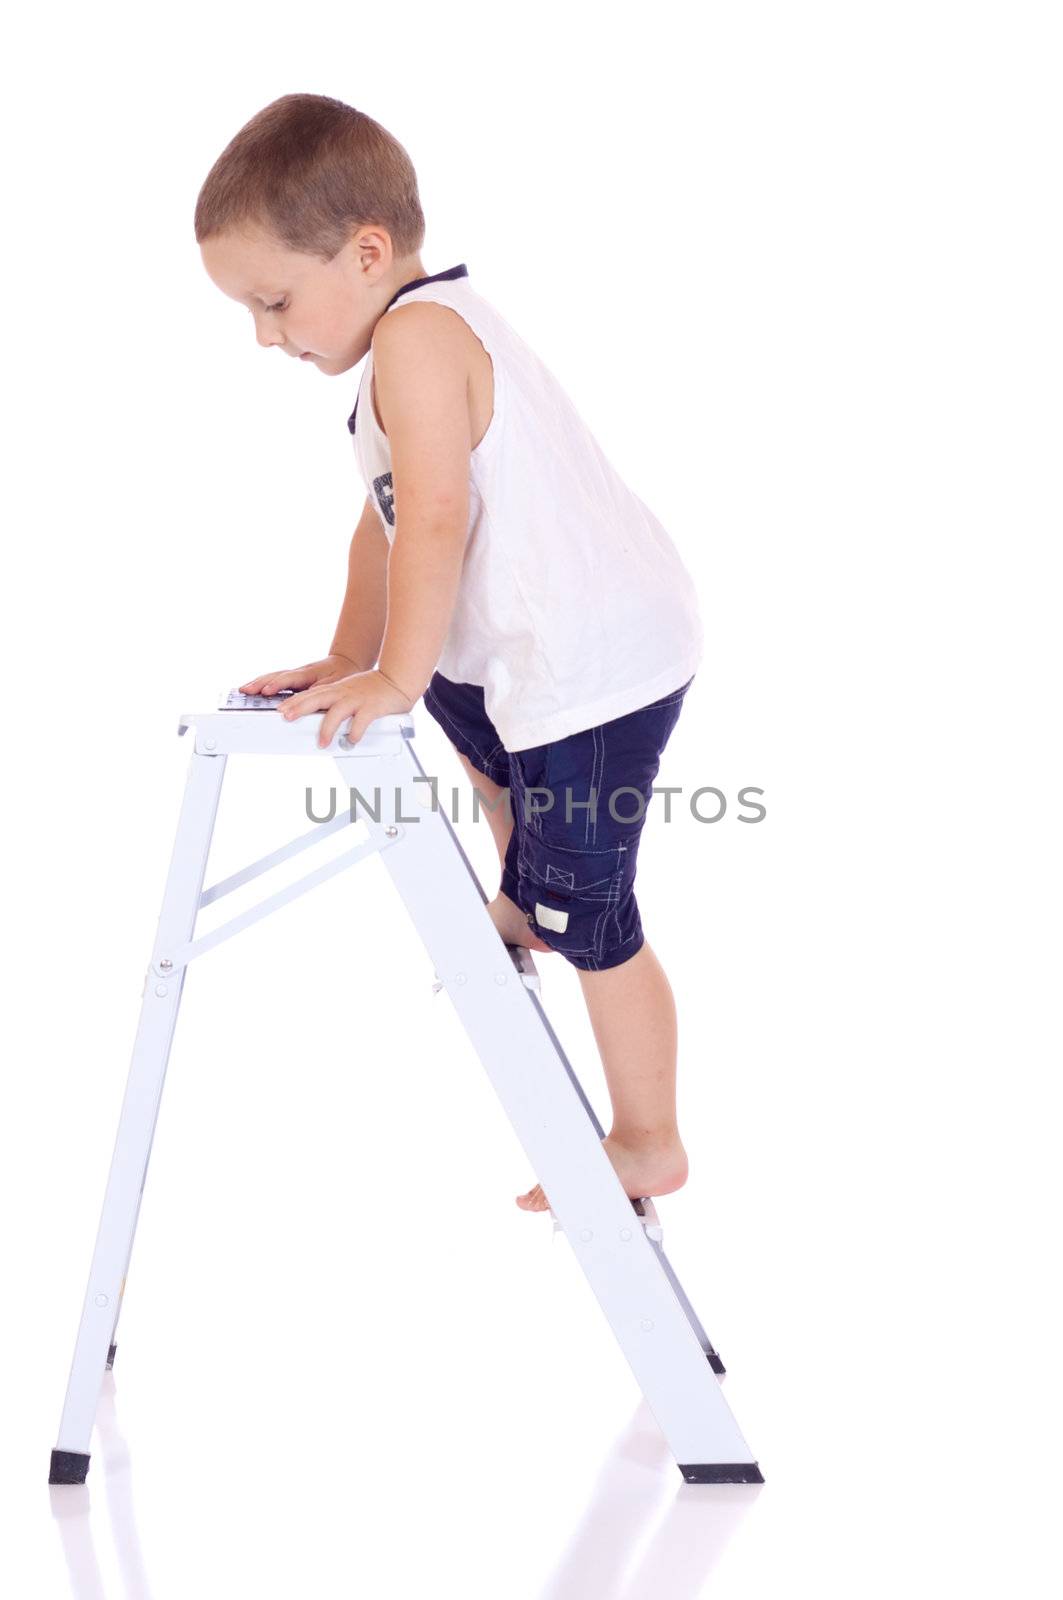 Climbing boy by Talanis